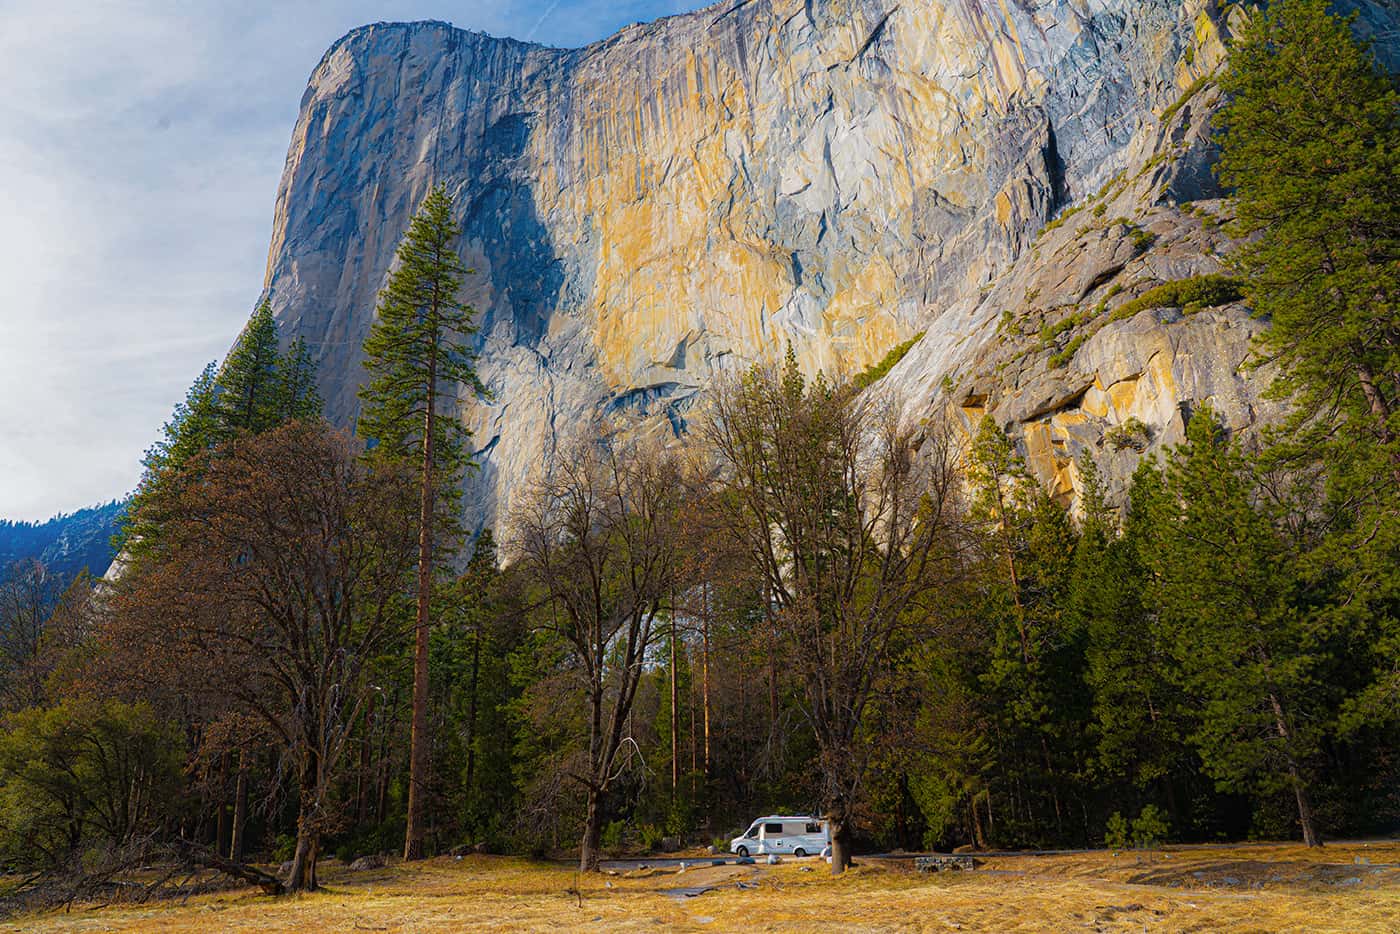 Winner: Ron Kardos - El Capitan, Yosemite Valley, USA